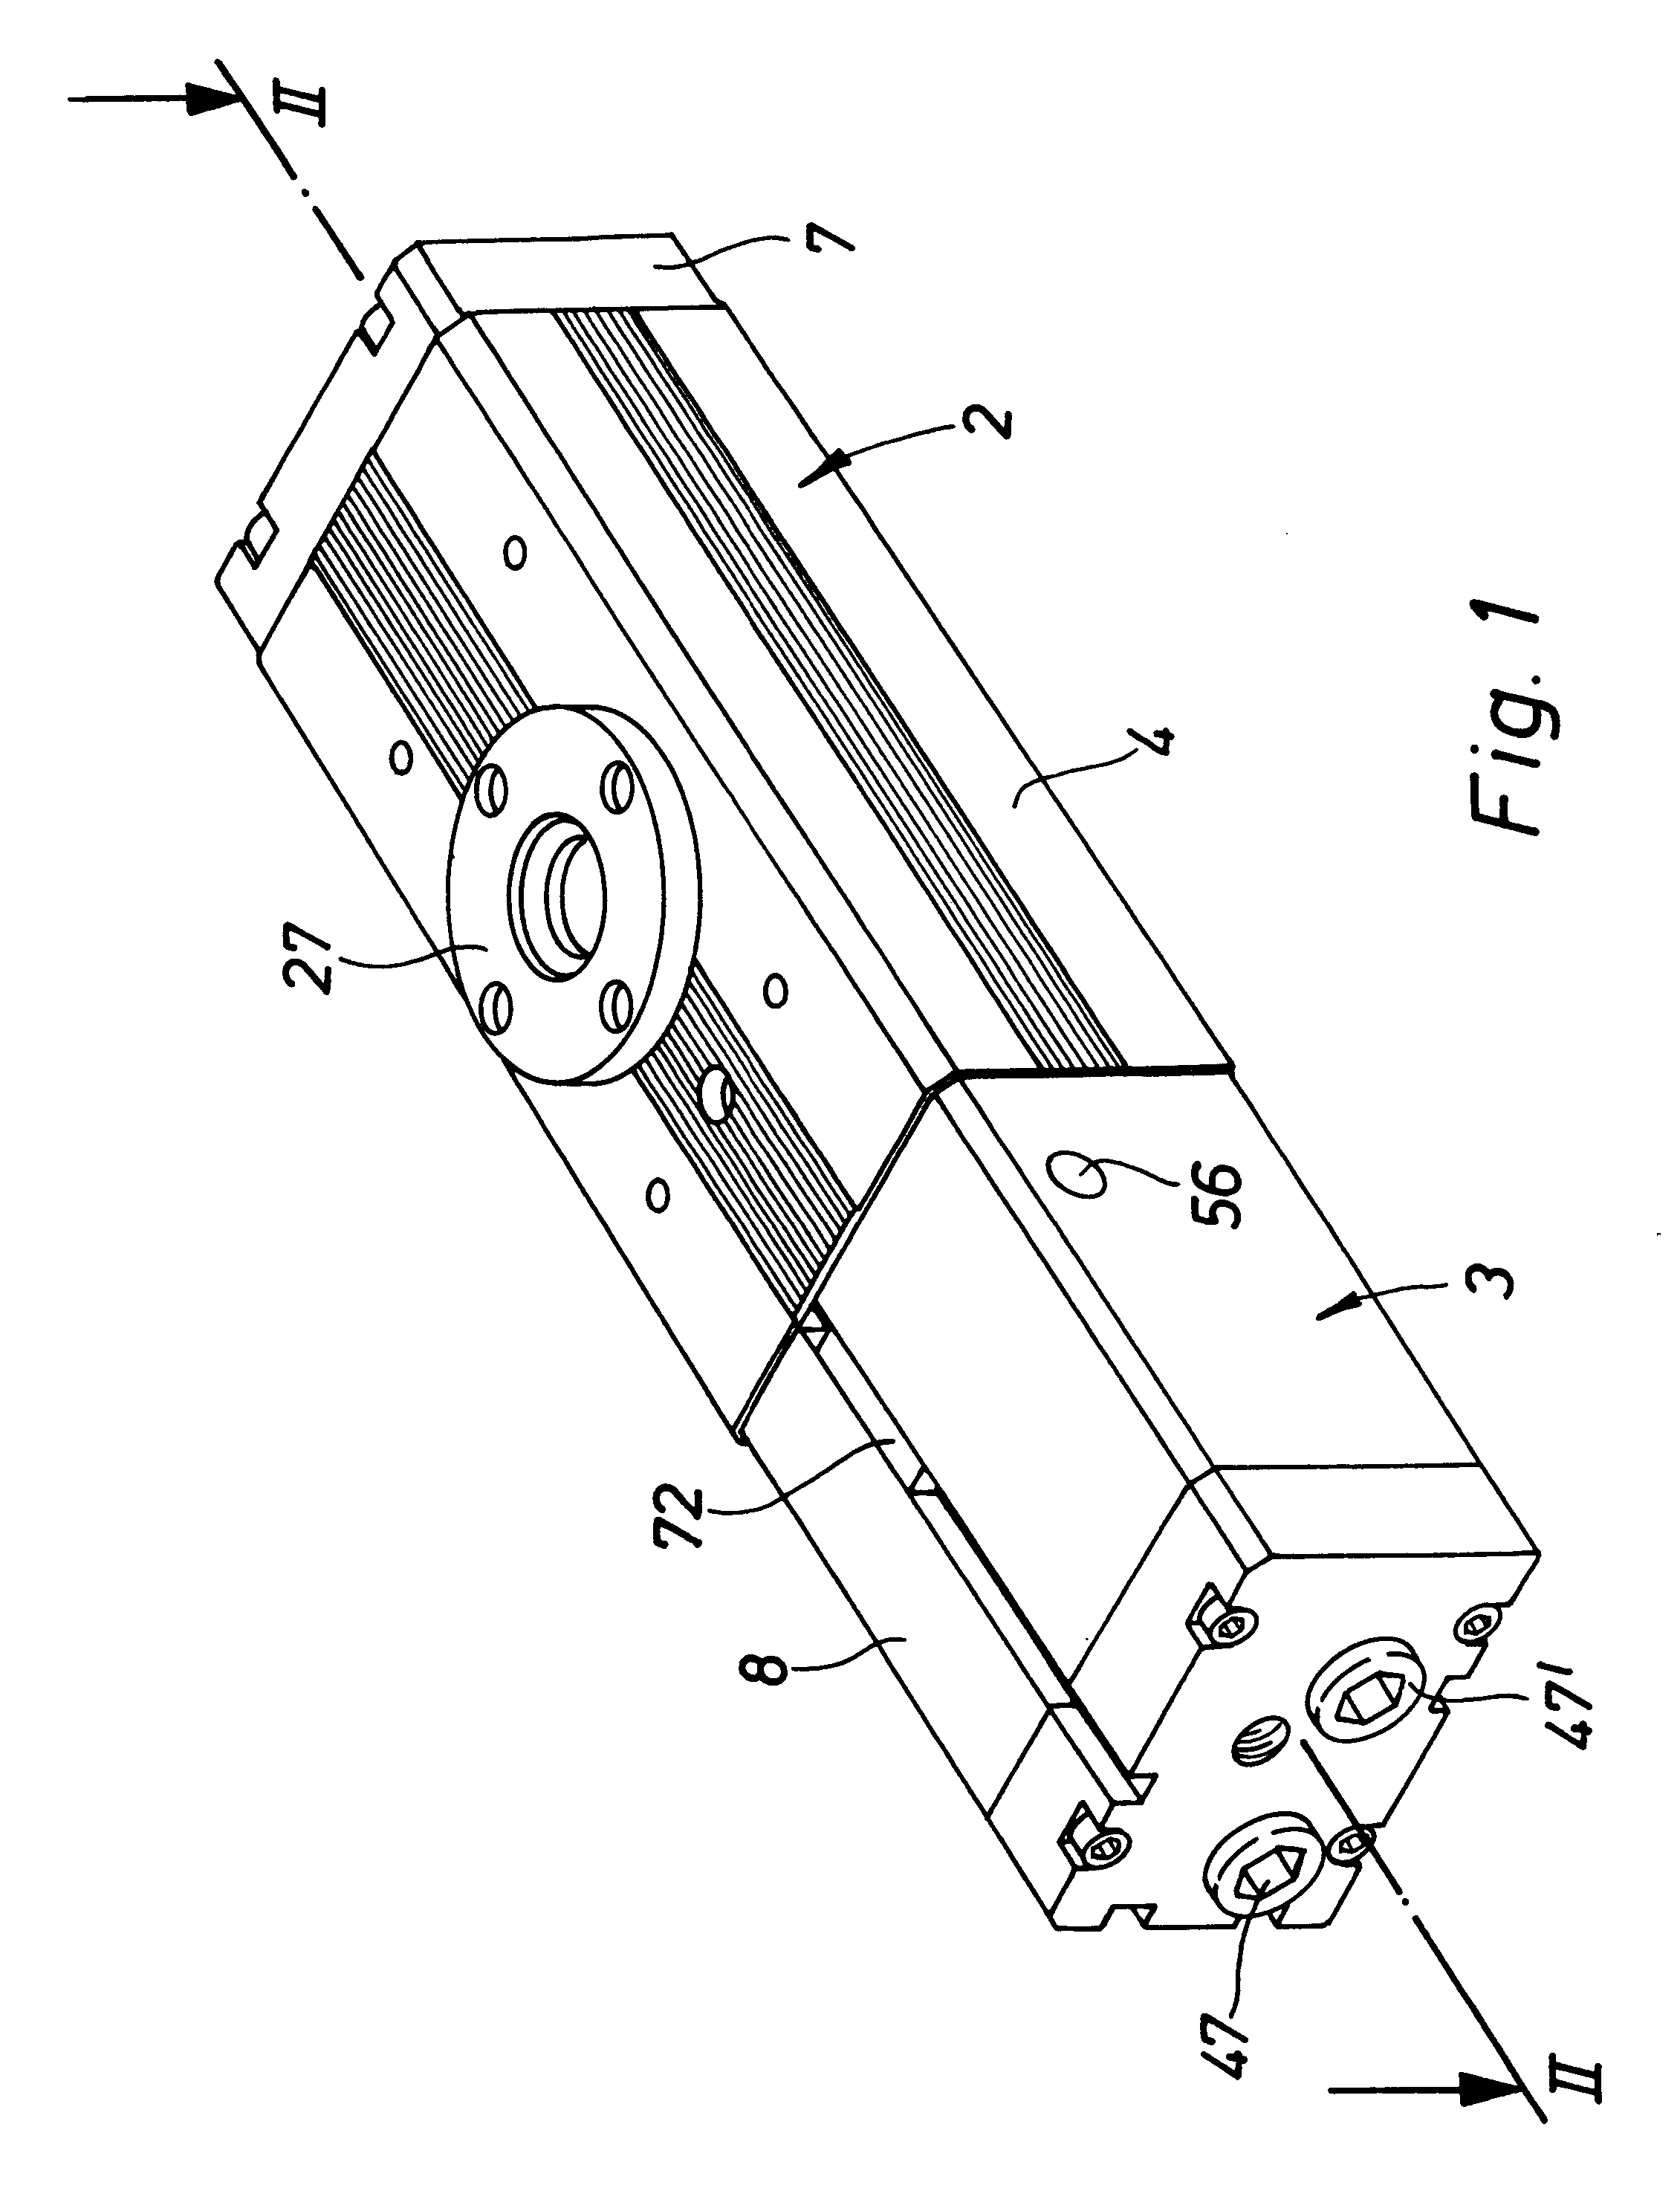 Fluid power rotary drive device